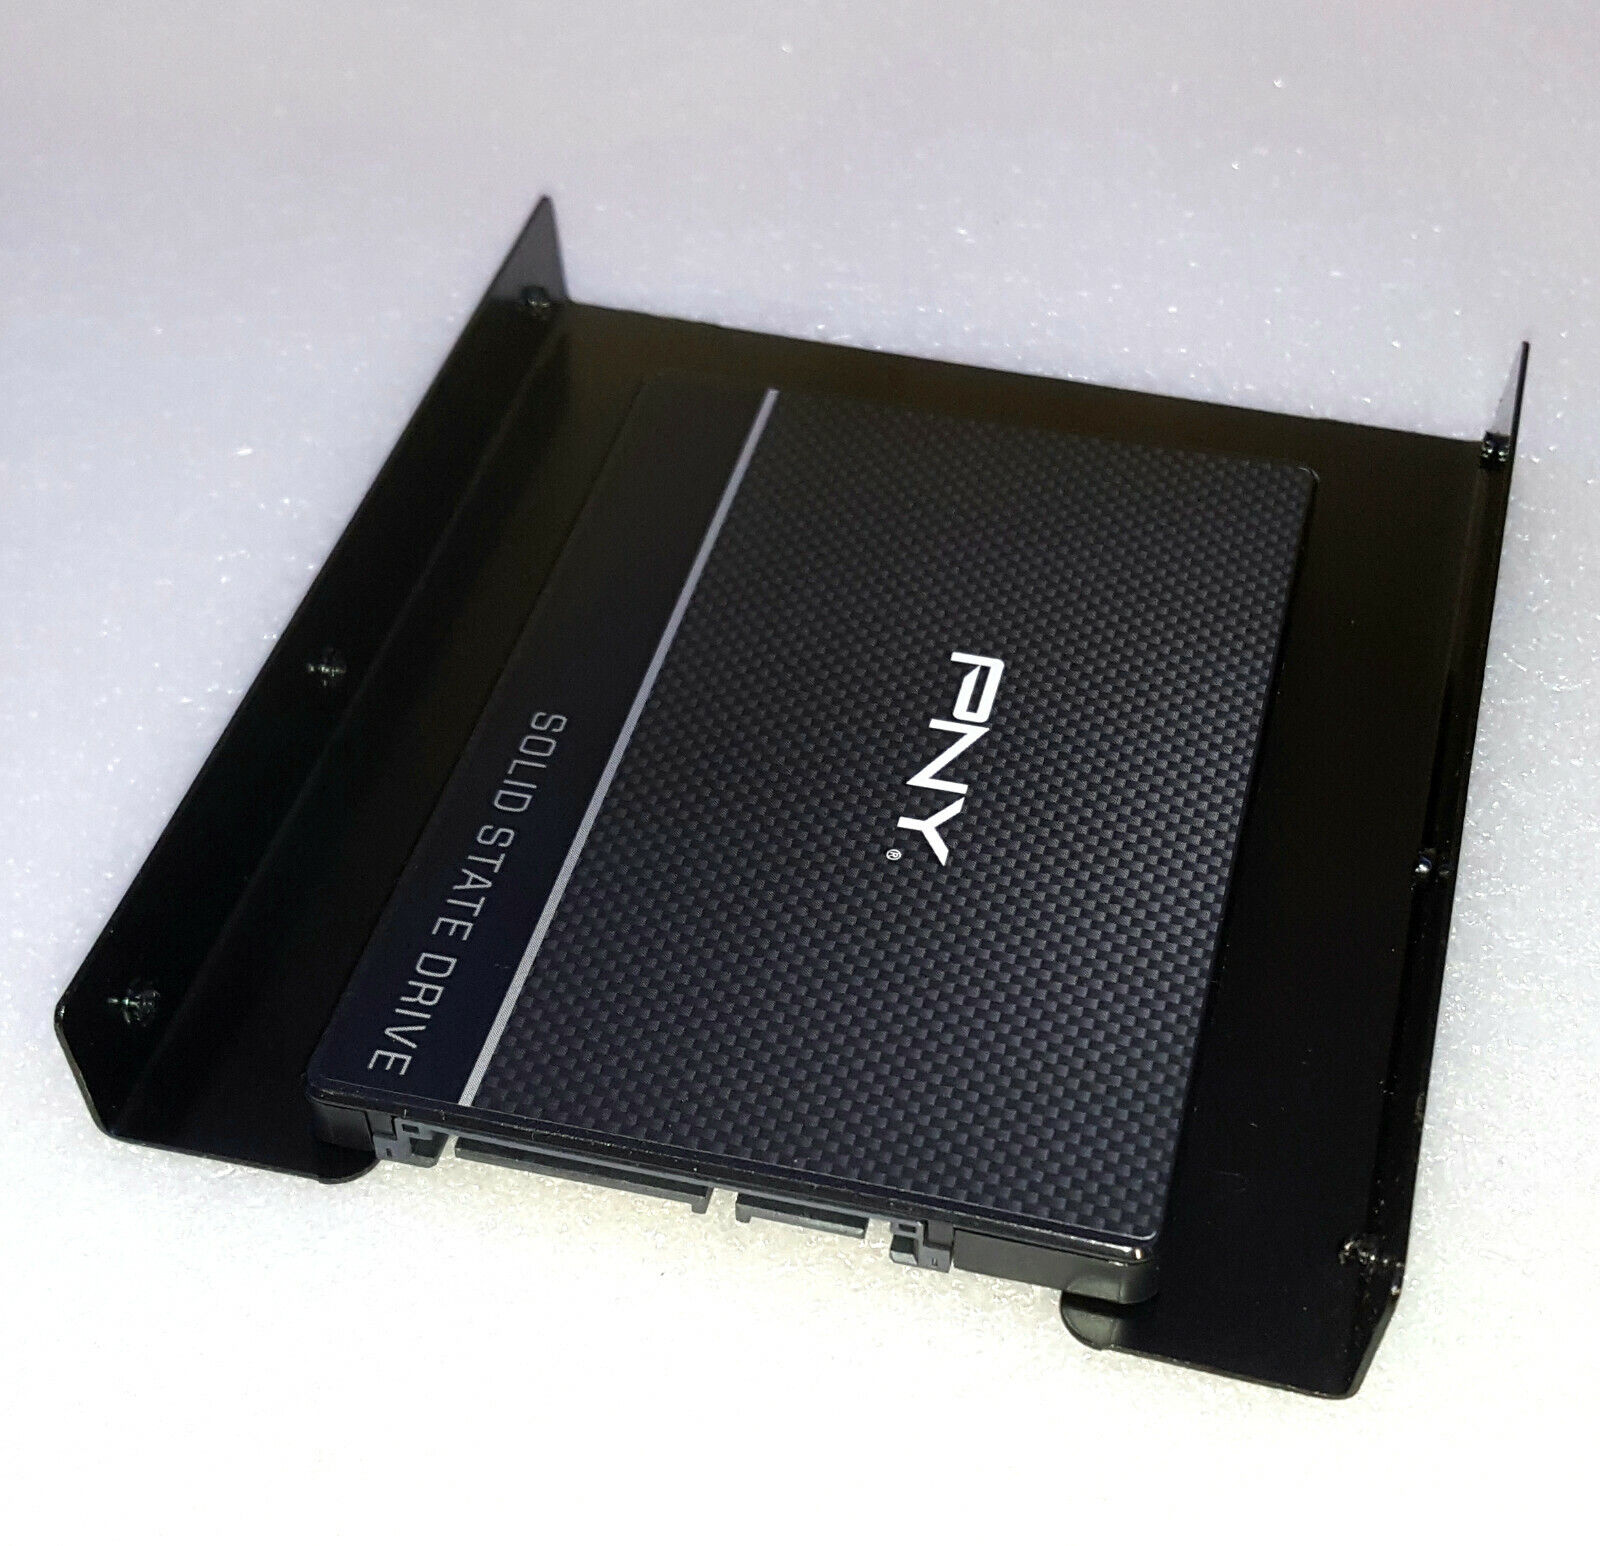 HP Pavilion p7-1380t - 500GB Solid State Drive SSD Windows 7 Professional 64 Bit